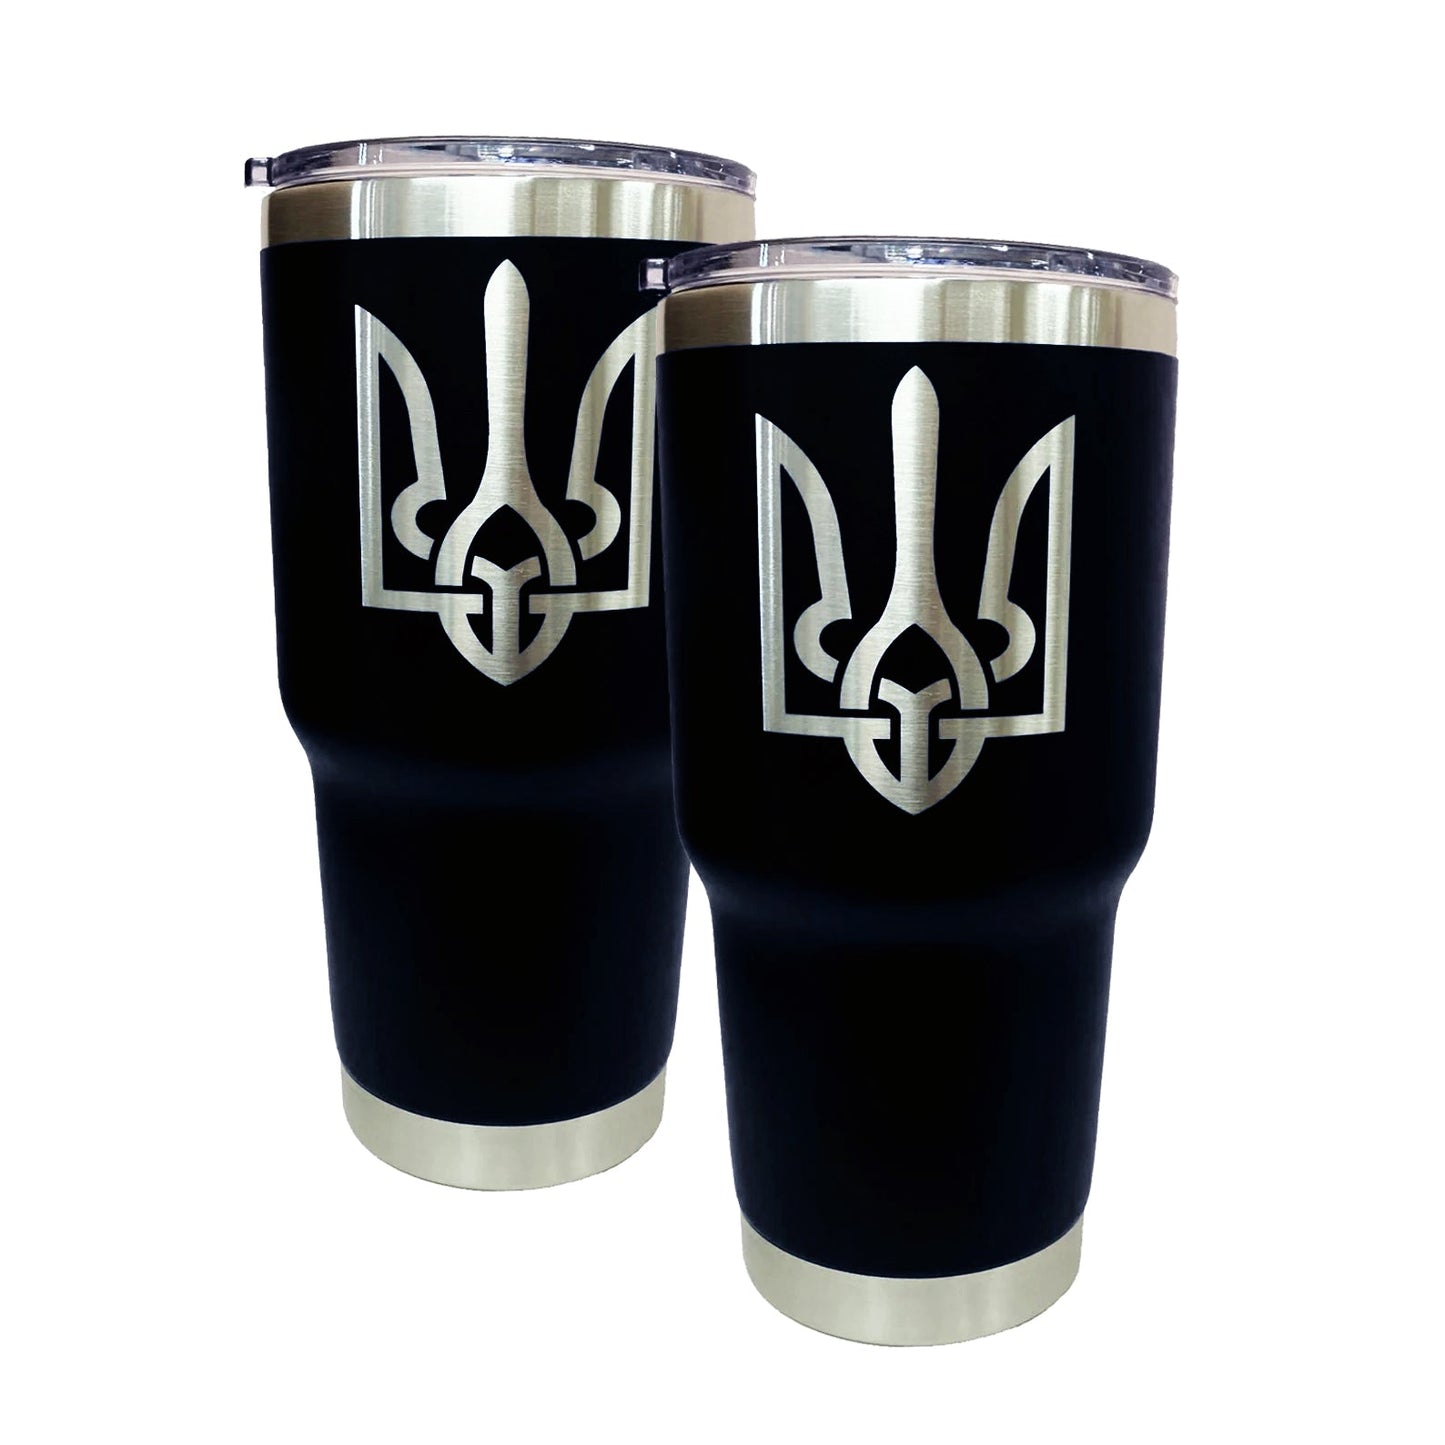 Ukraine Support Coat of Ukraine Tumbler Mug Gift Emblem Travel Coffee Cup